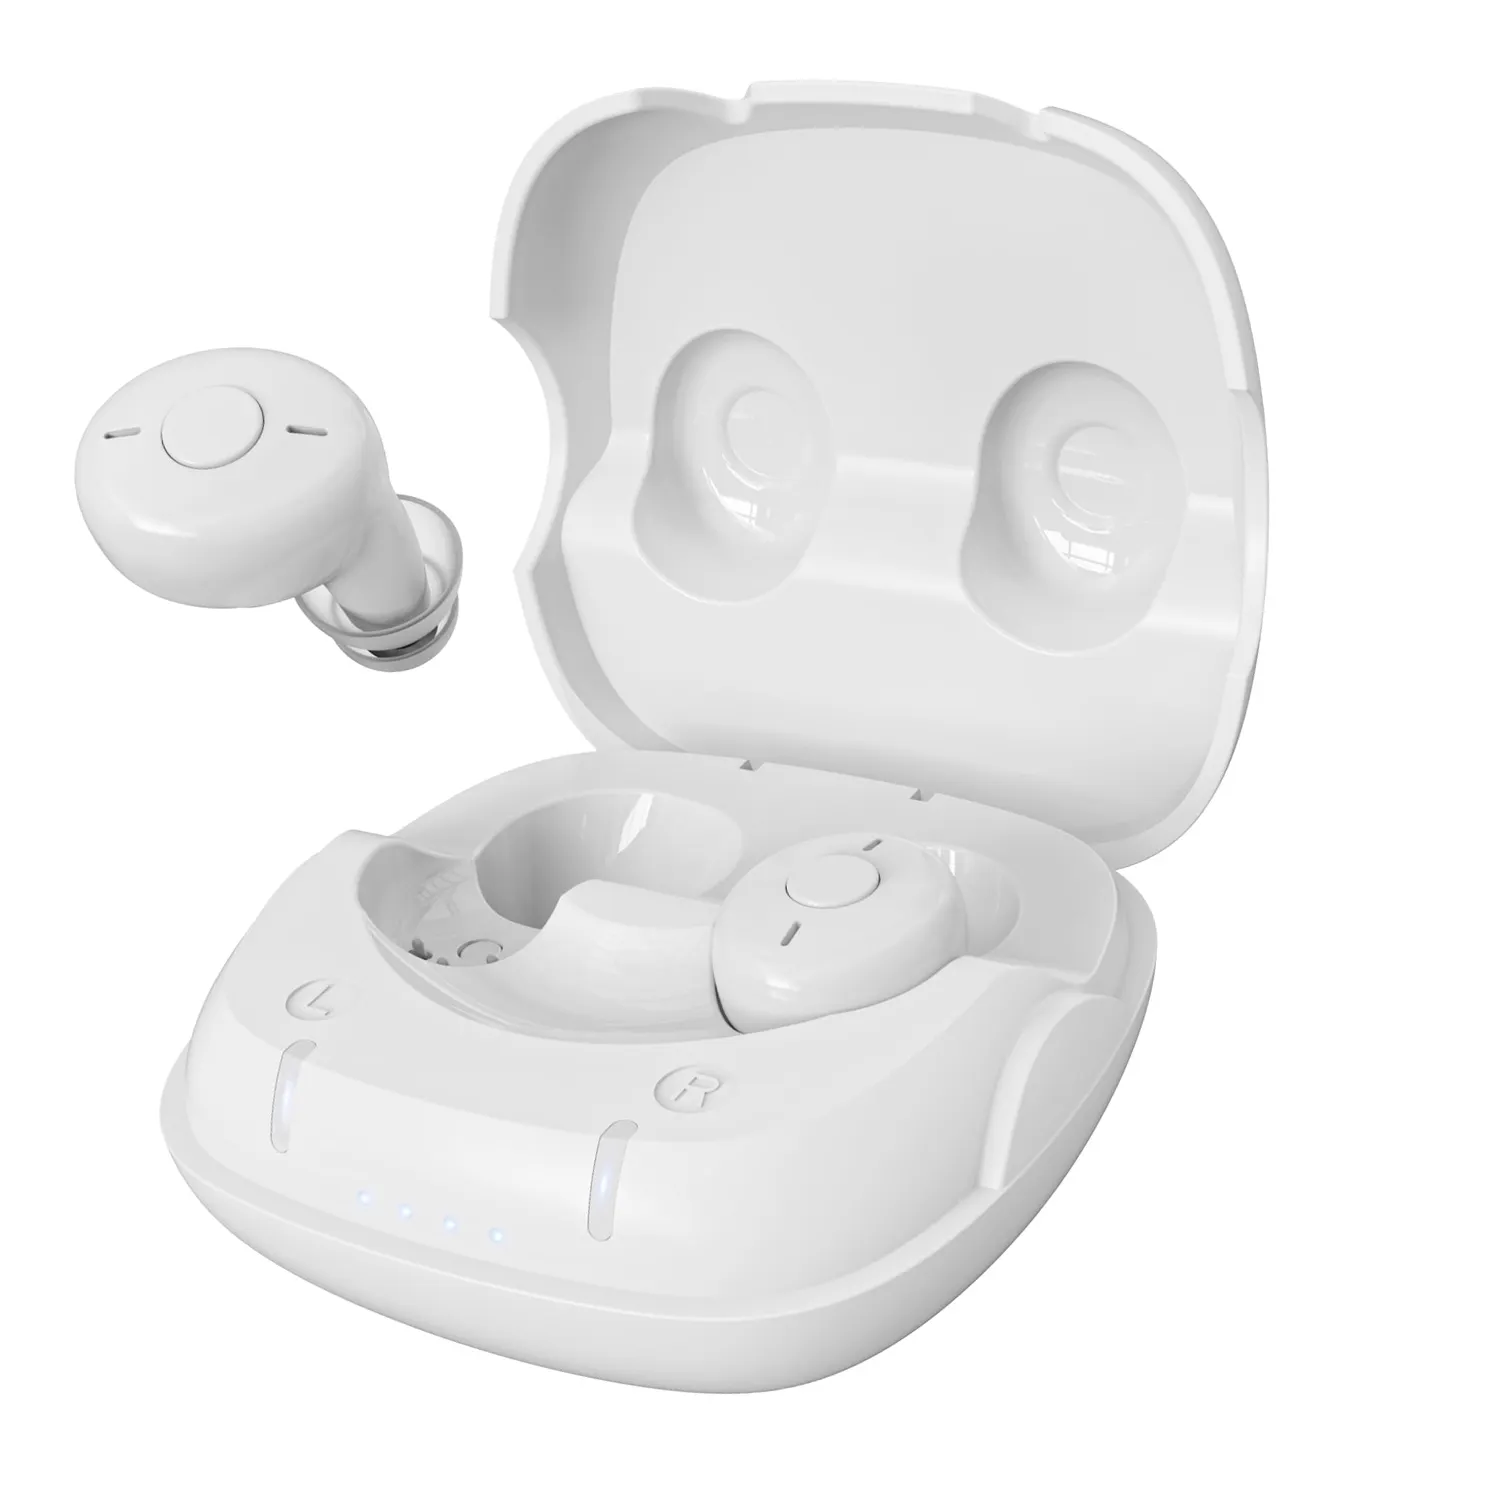 Wenatone 새로운 최고의 미니 귀 보청기 장치 귀에 보이지 않는 충전식 보청기 청각 장애인 용 음향 증폭기